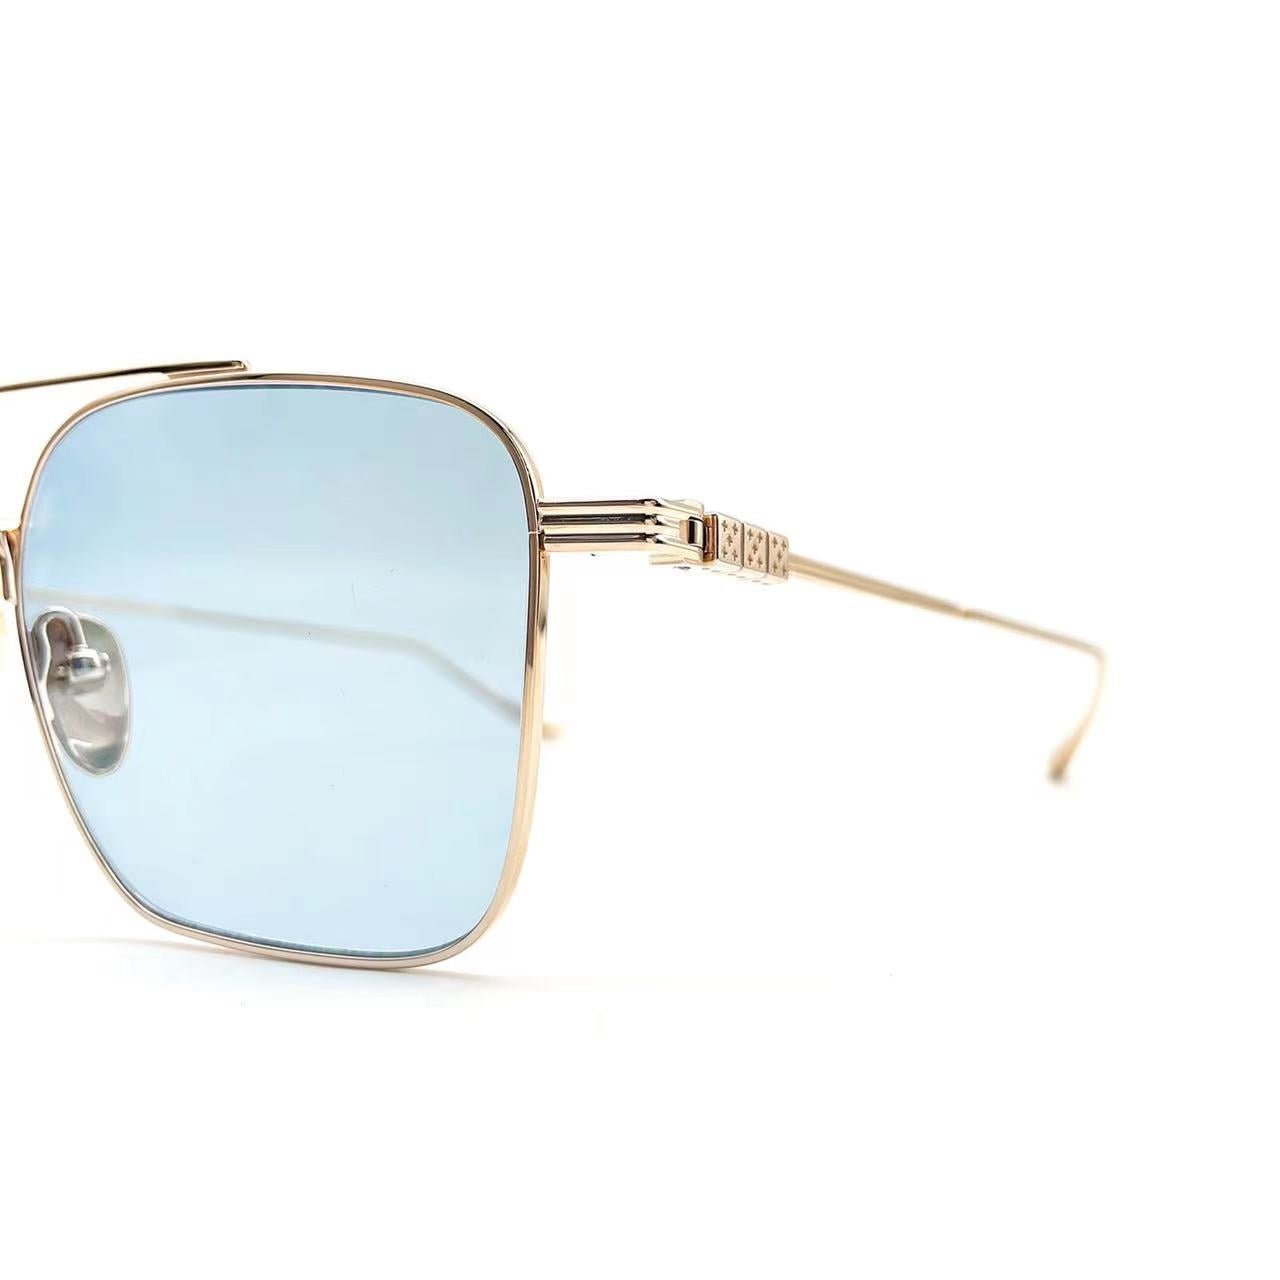 Chrome Hearts AM GP Gold Framed Dice Sunglasses - SHENGLI ROAD MARKET